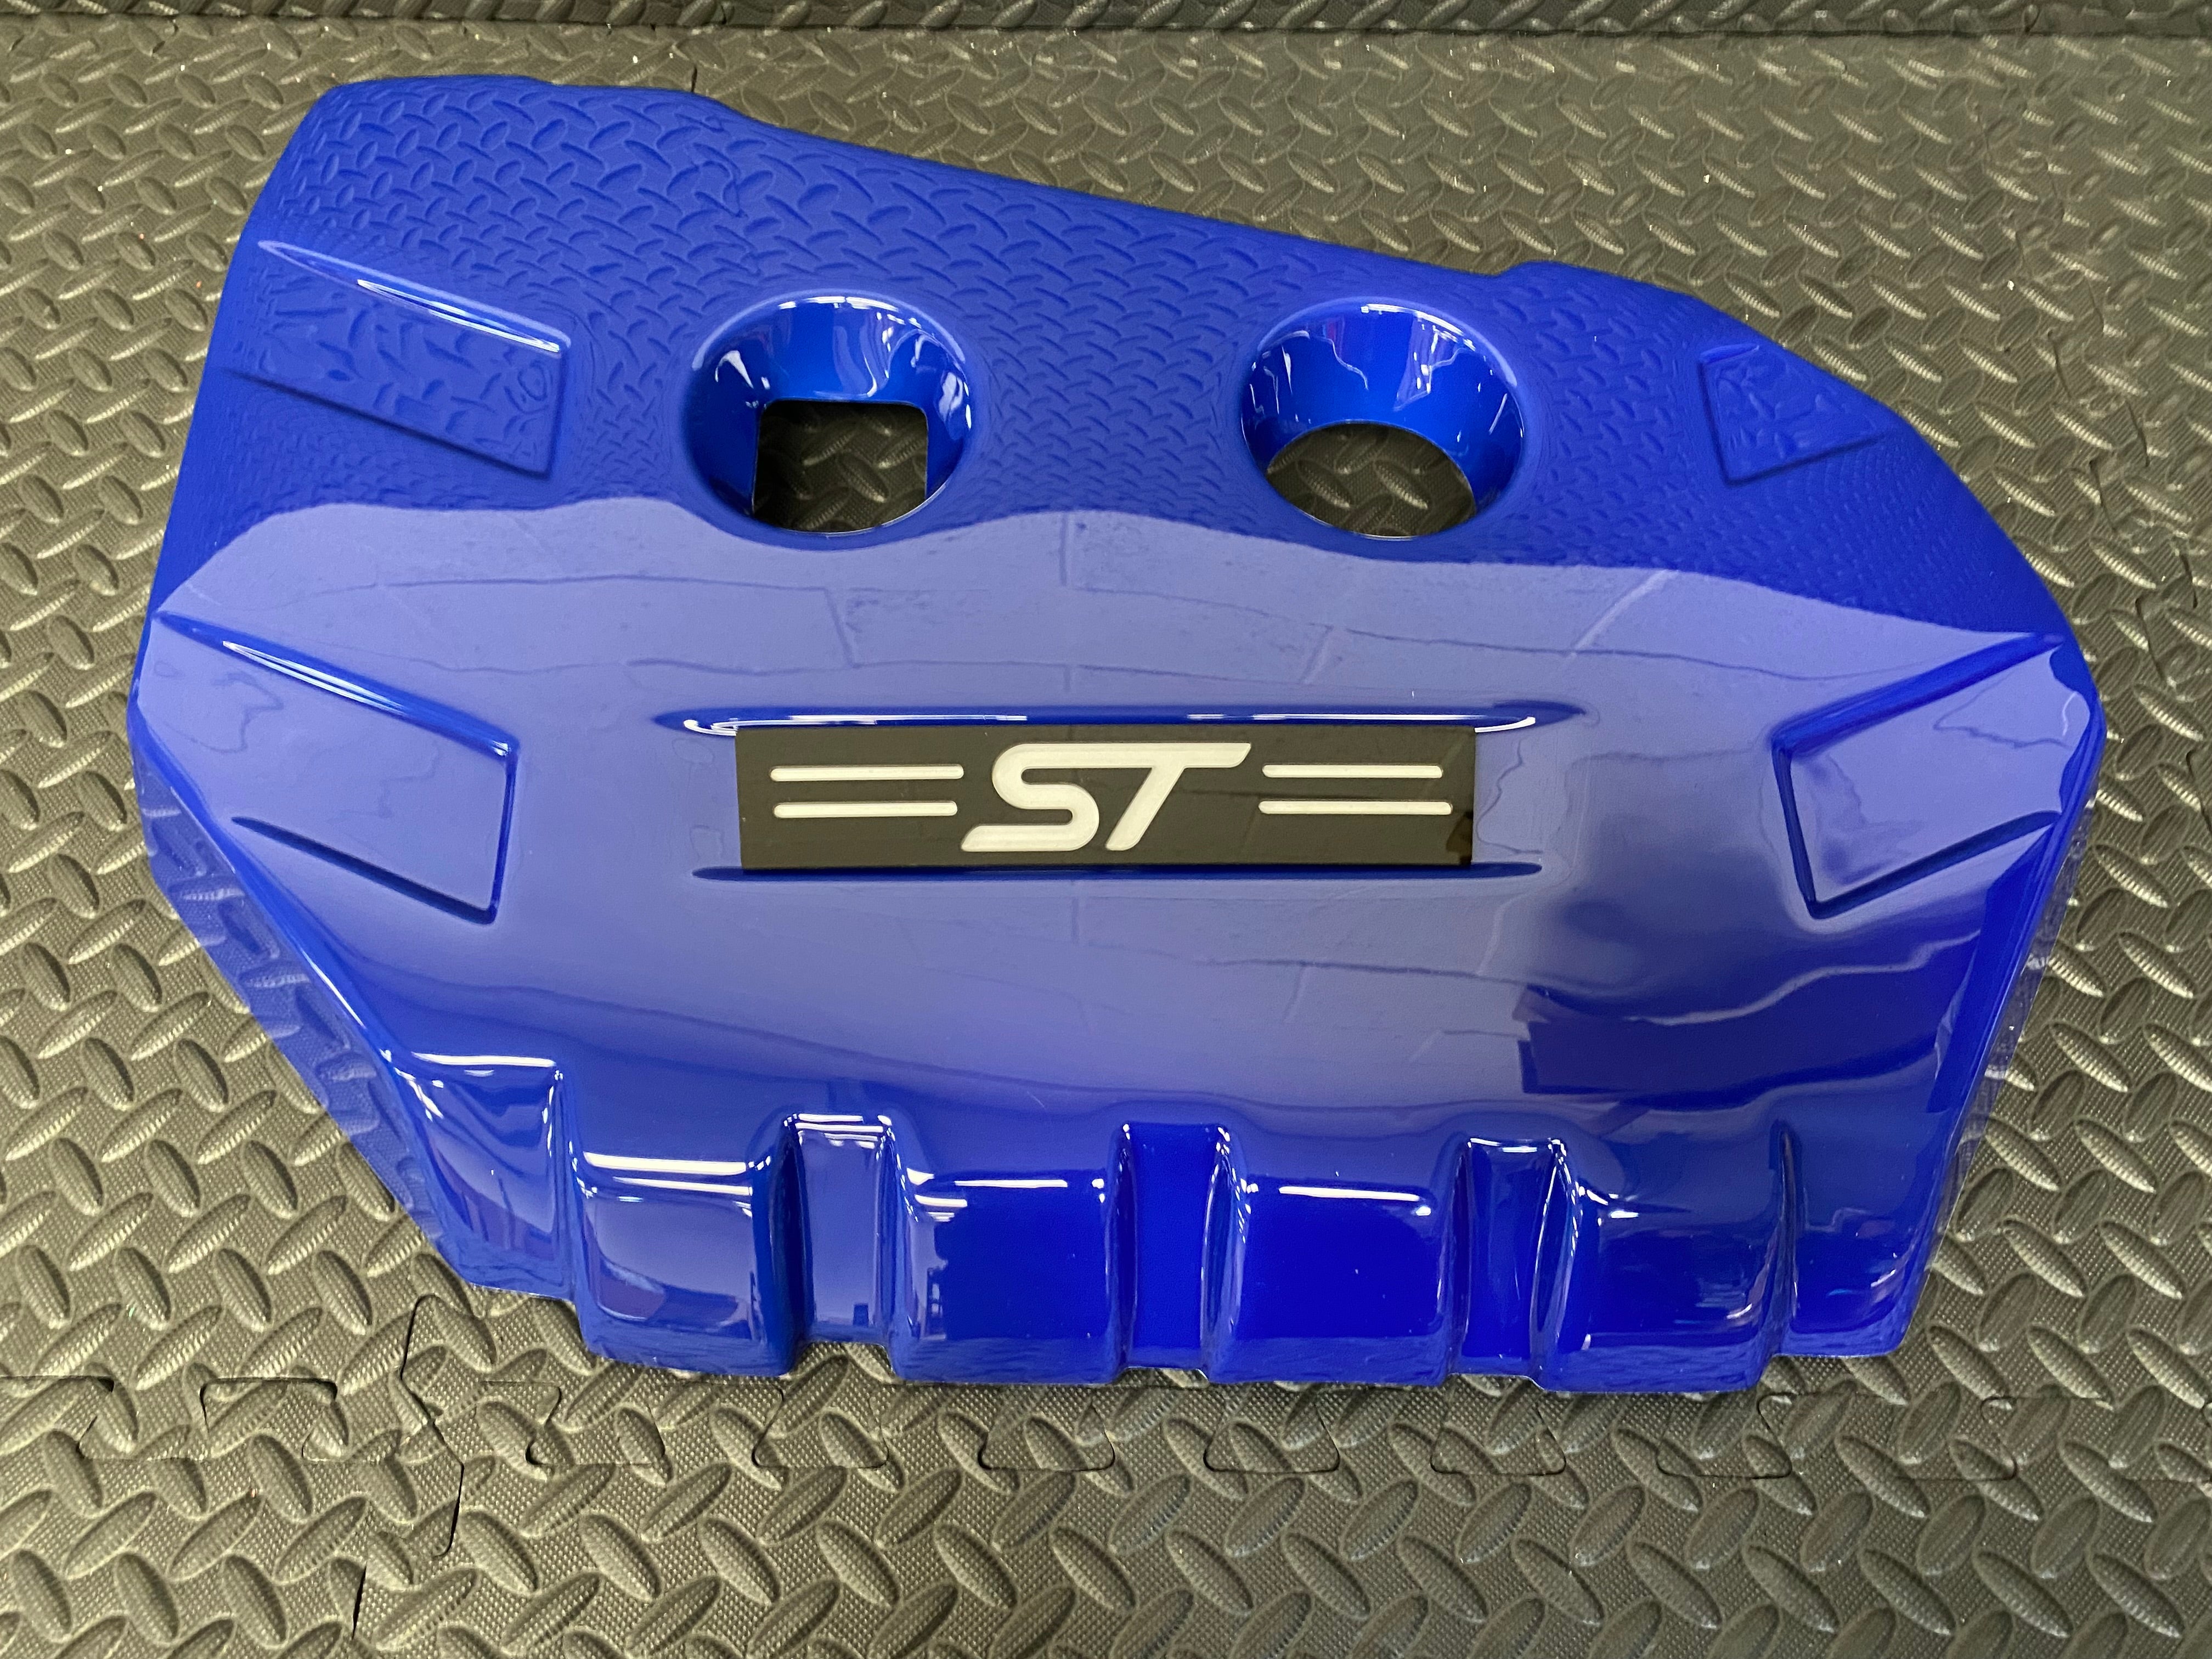 Proform Engine Cover - MK3/3.5 Focus ST Petrol (Plastic Finishes)